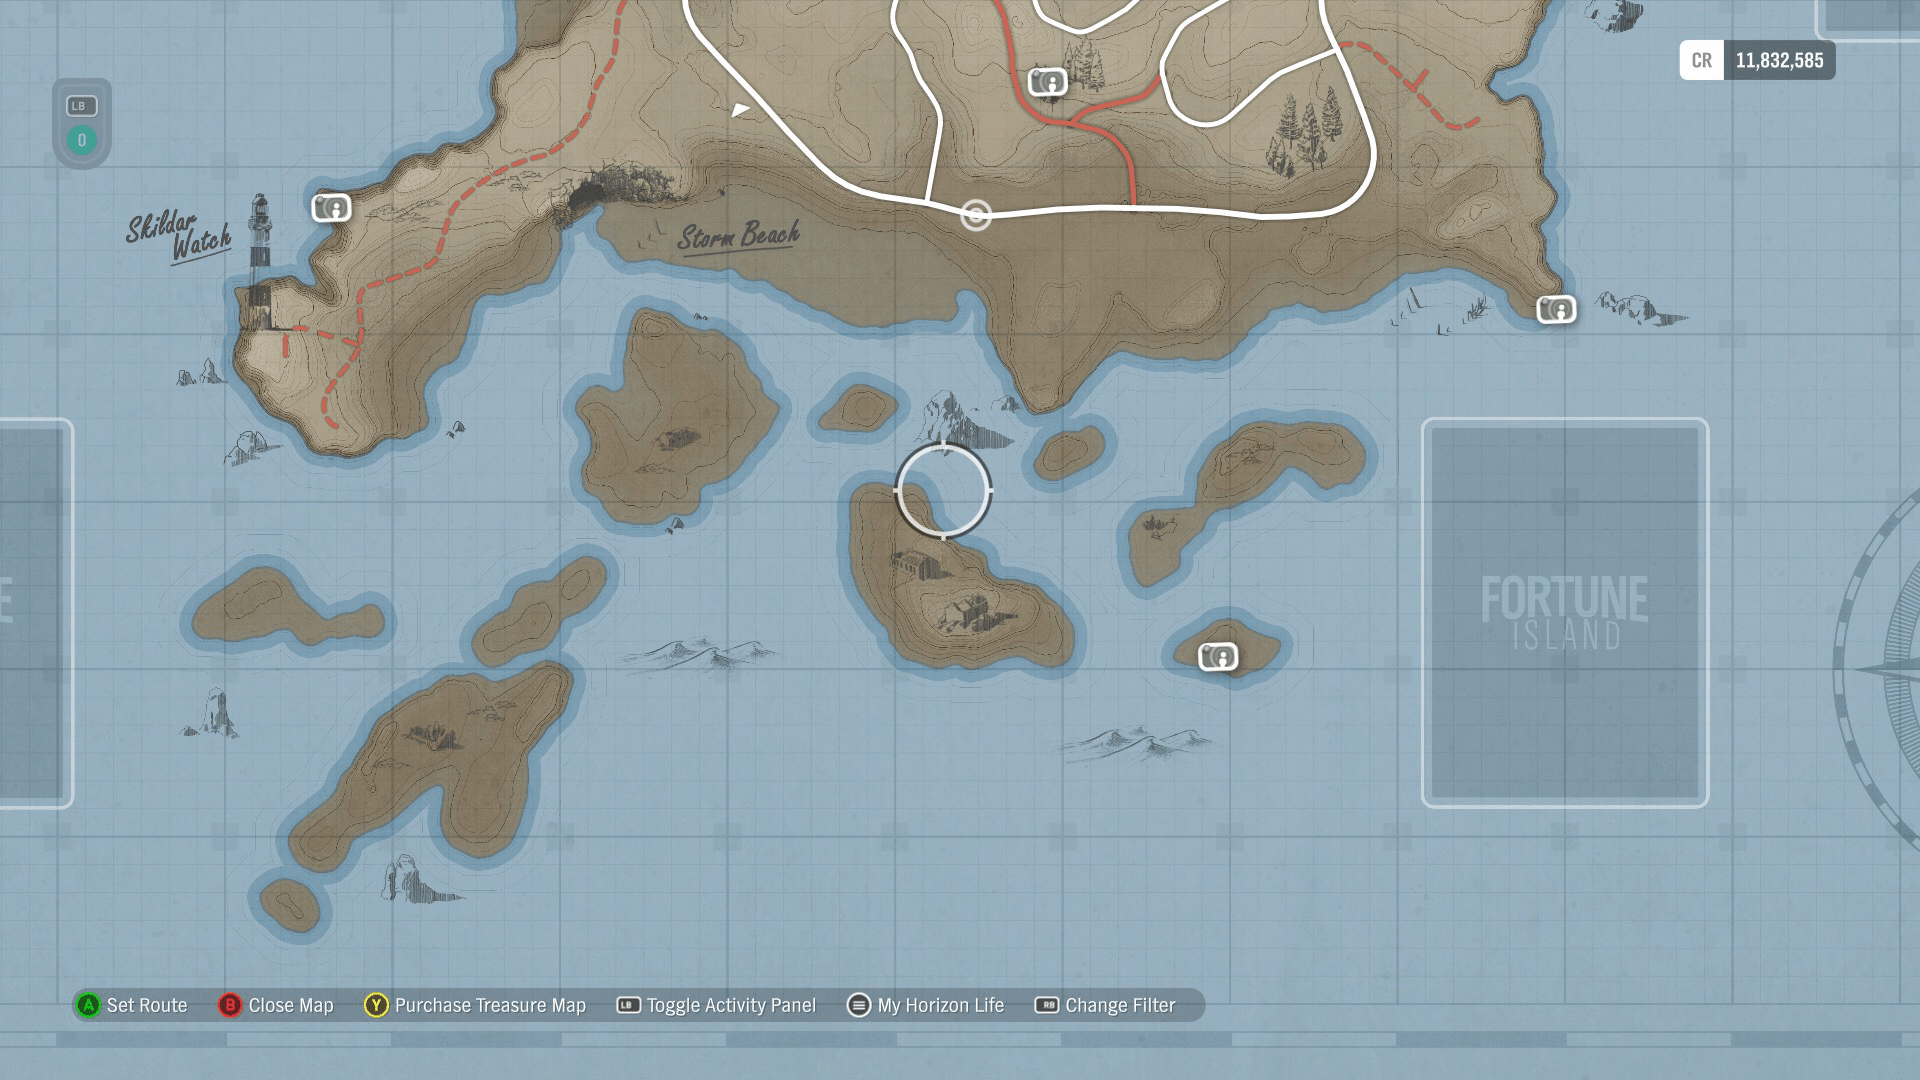 Fortune island forza. Карта сокровищ Forza Horizon 4 Fortune Island. Карта сокровищ Forza Horizon 4. Форза 4 Форчун Айленд сокровища. Стенды влияния Forza Horizon 4 Fortune Island.